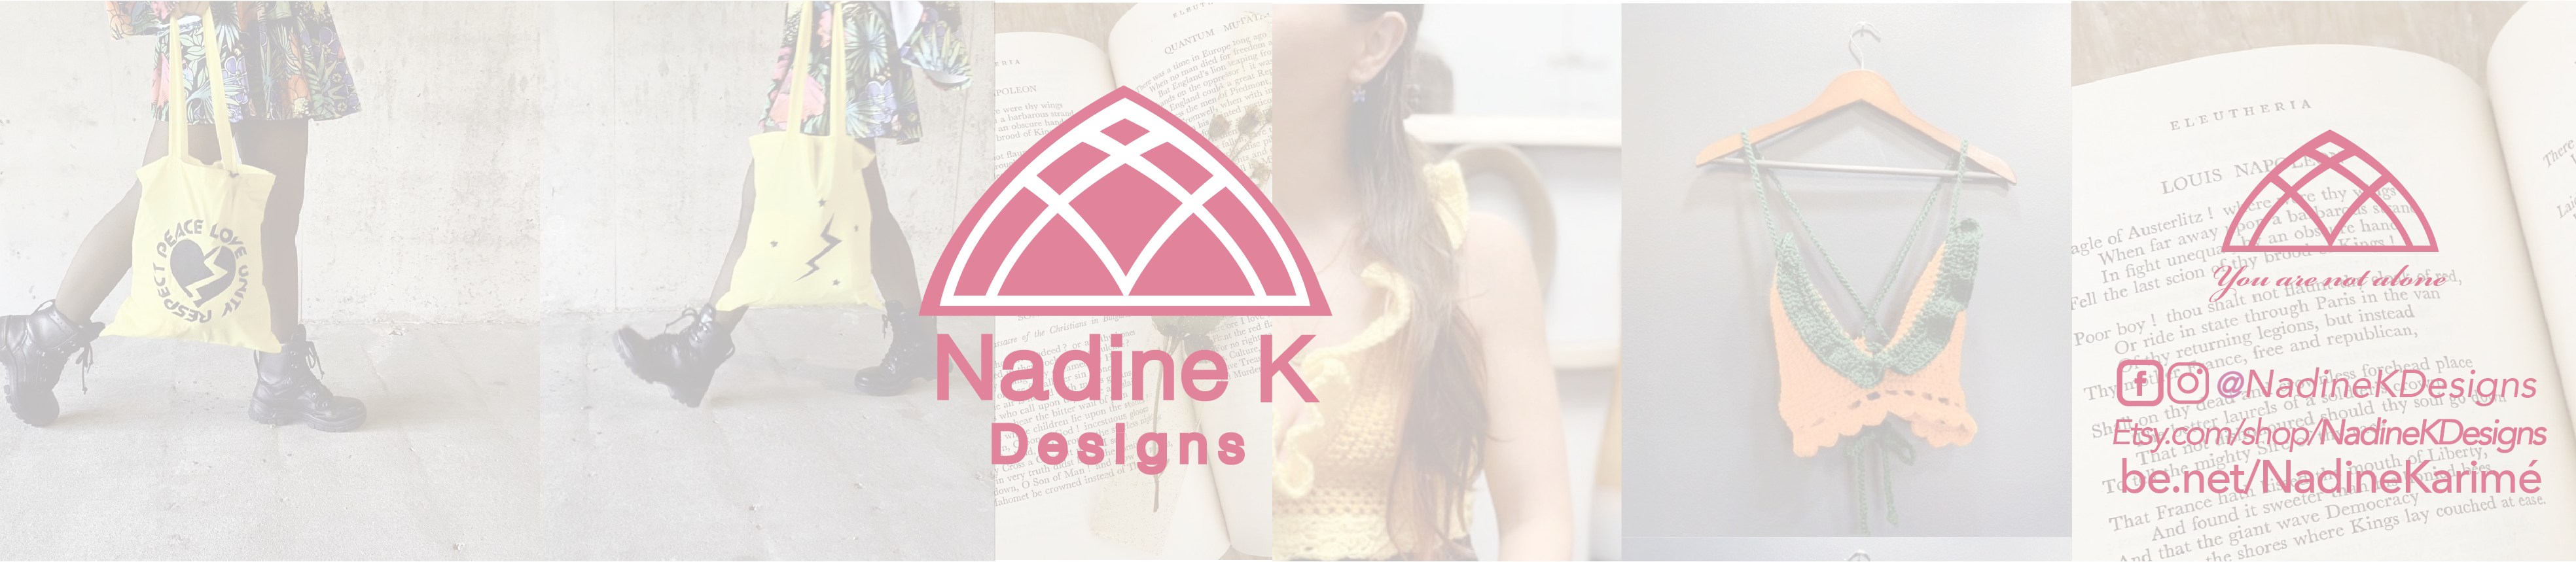 Nadine Karimé profil başlığı